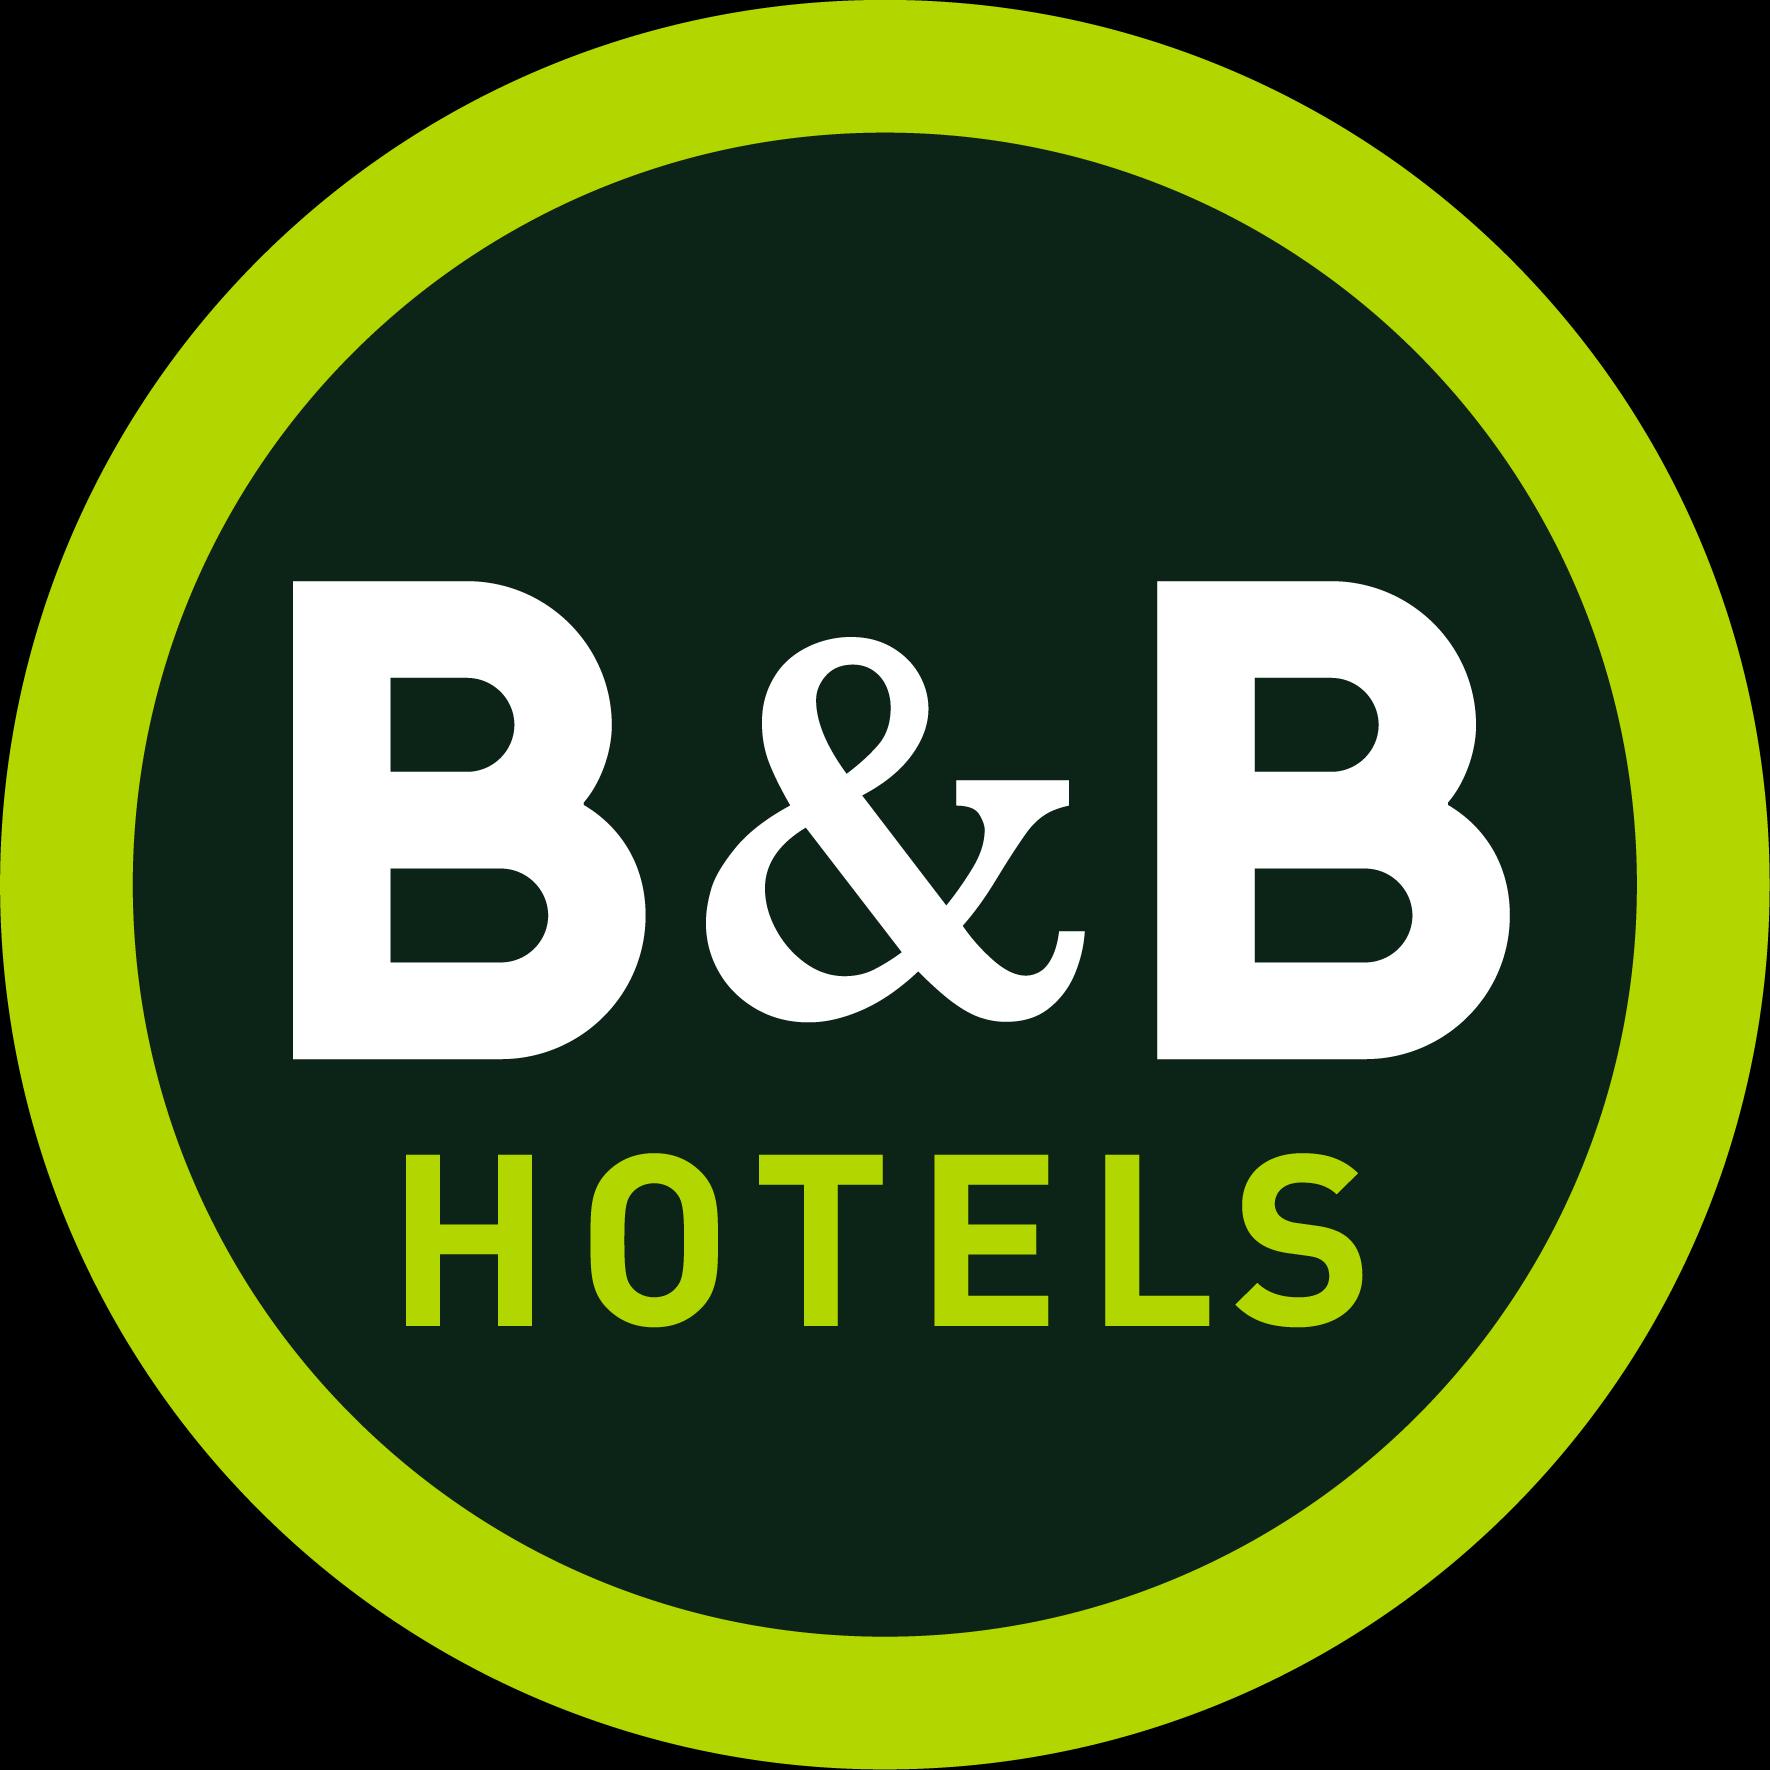 B&b Hotel Antibes Sophia Antipolis Biot